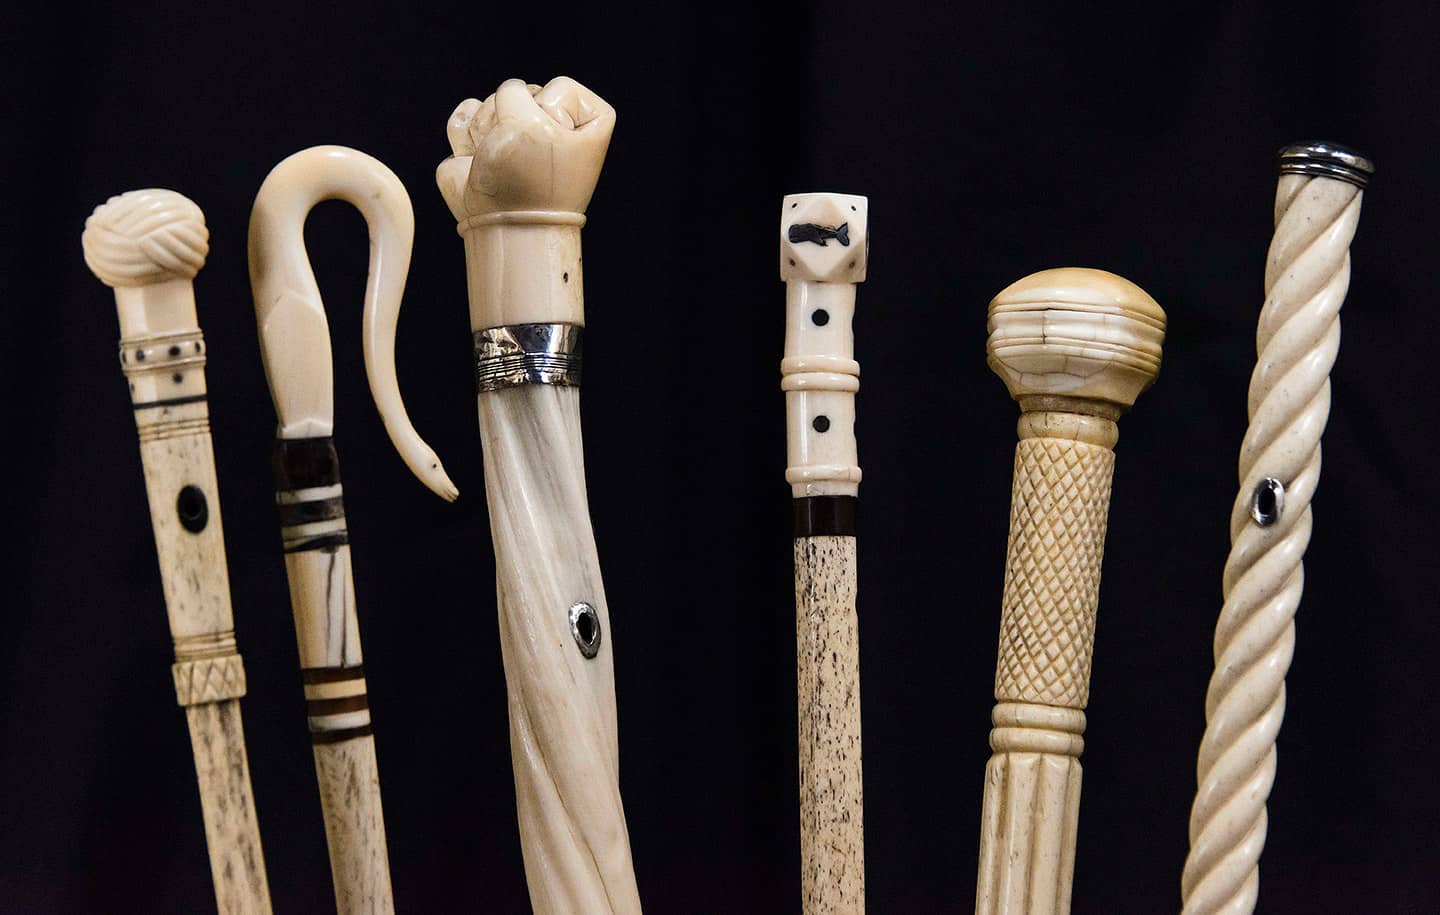 Professional cane